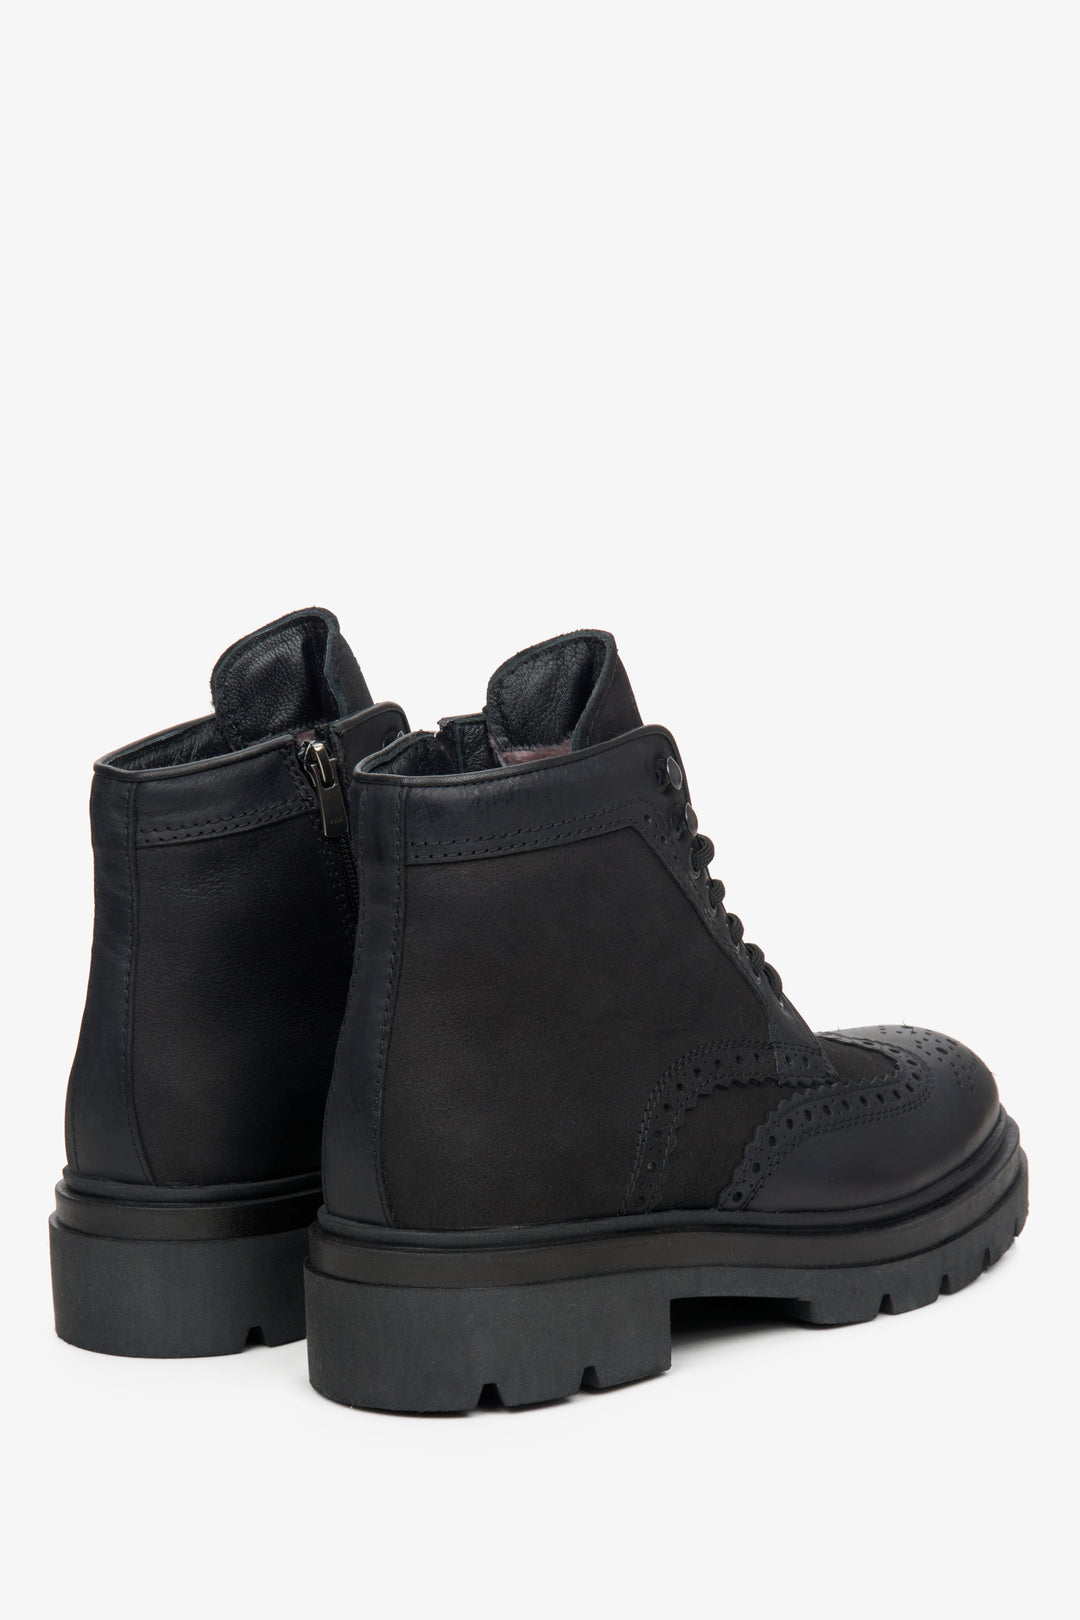 Men's black nubuck Estro boots - close-up on the heel counter.